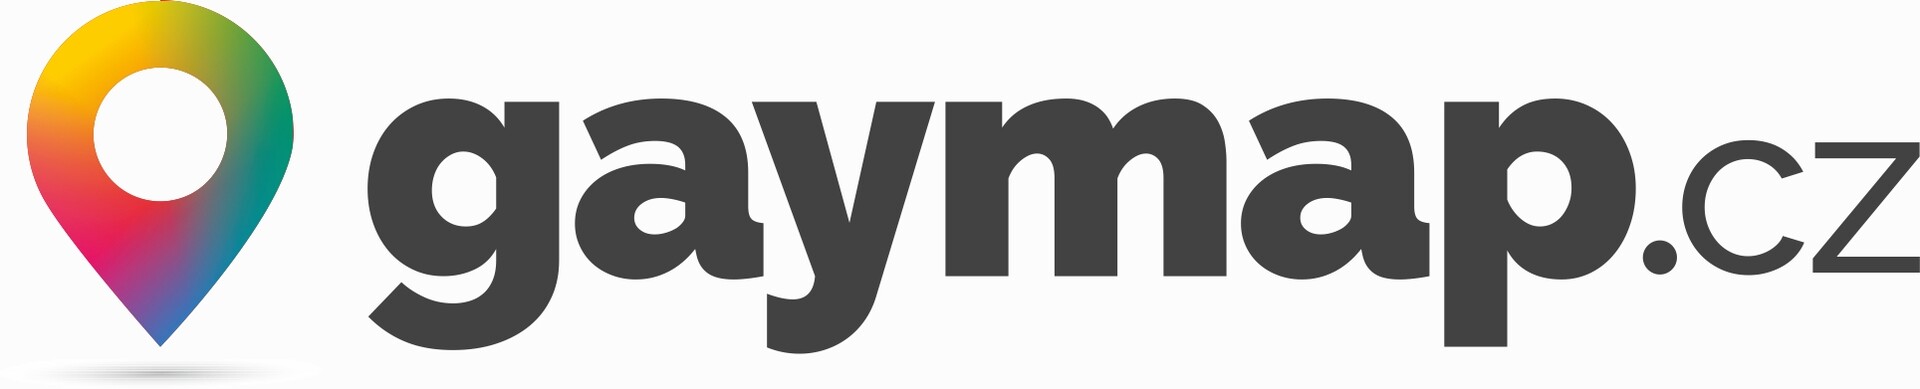 gaymap logo